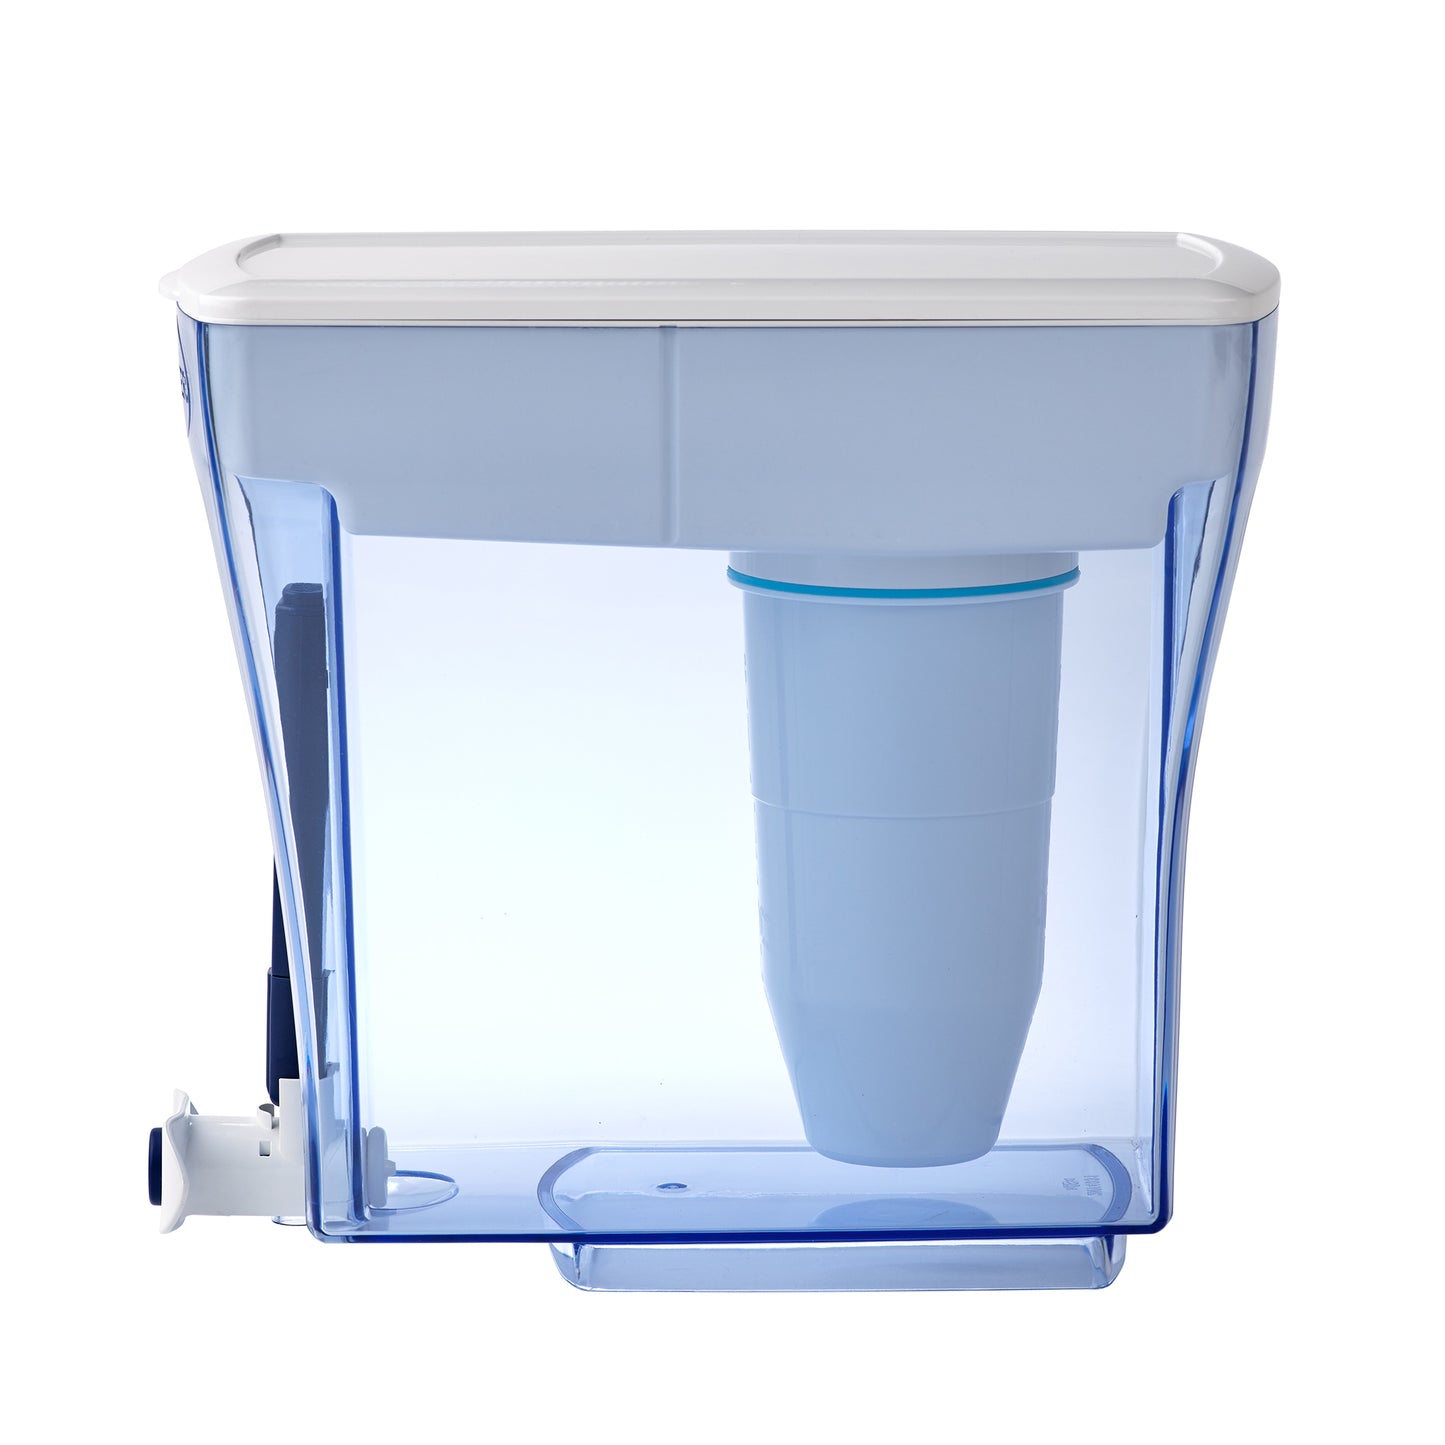 System filtrów o pojemności 4,7 litra | System filtrów na 20 filiżanek (4,7 litra)